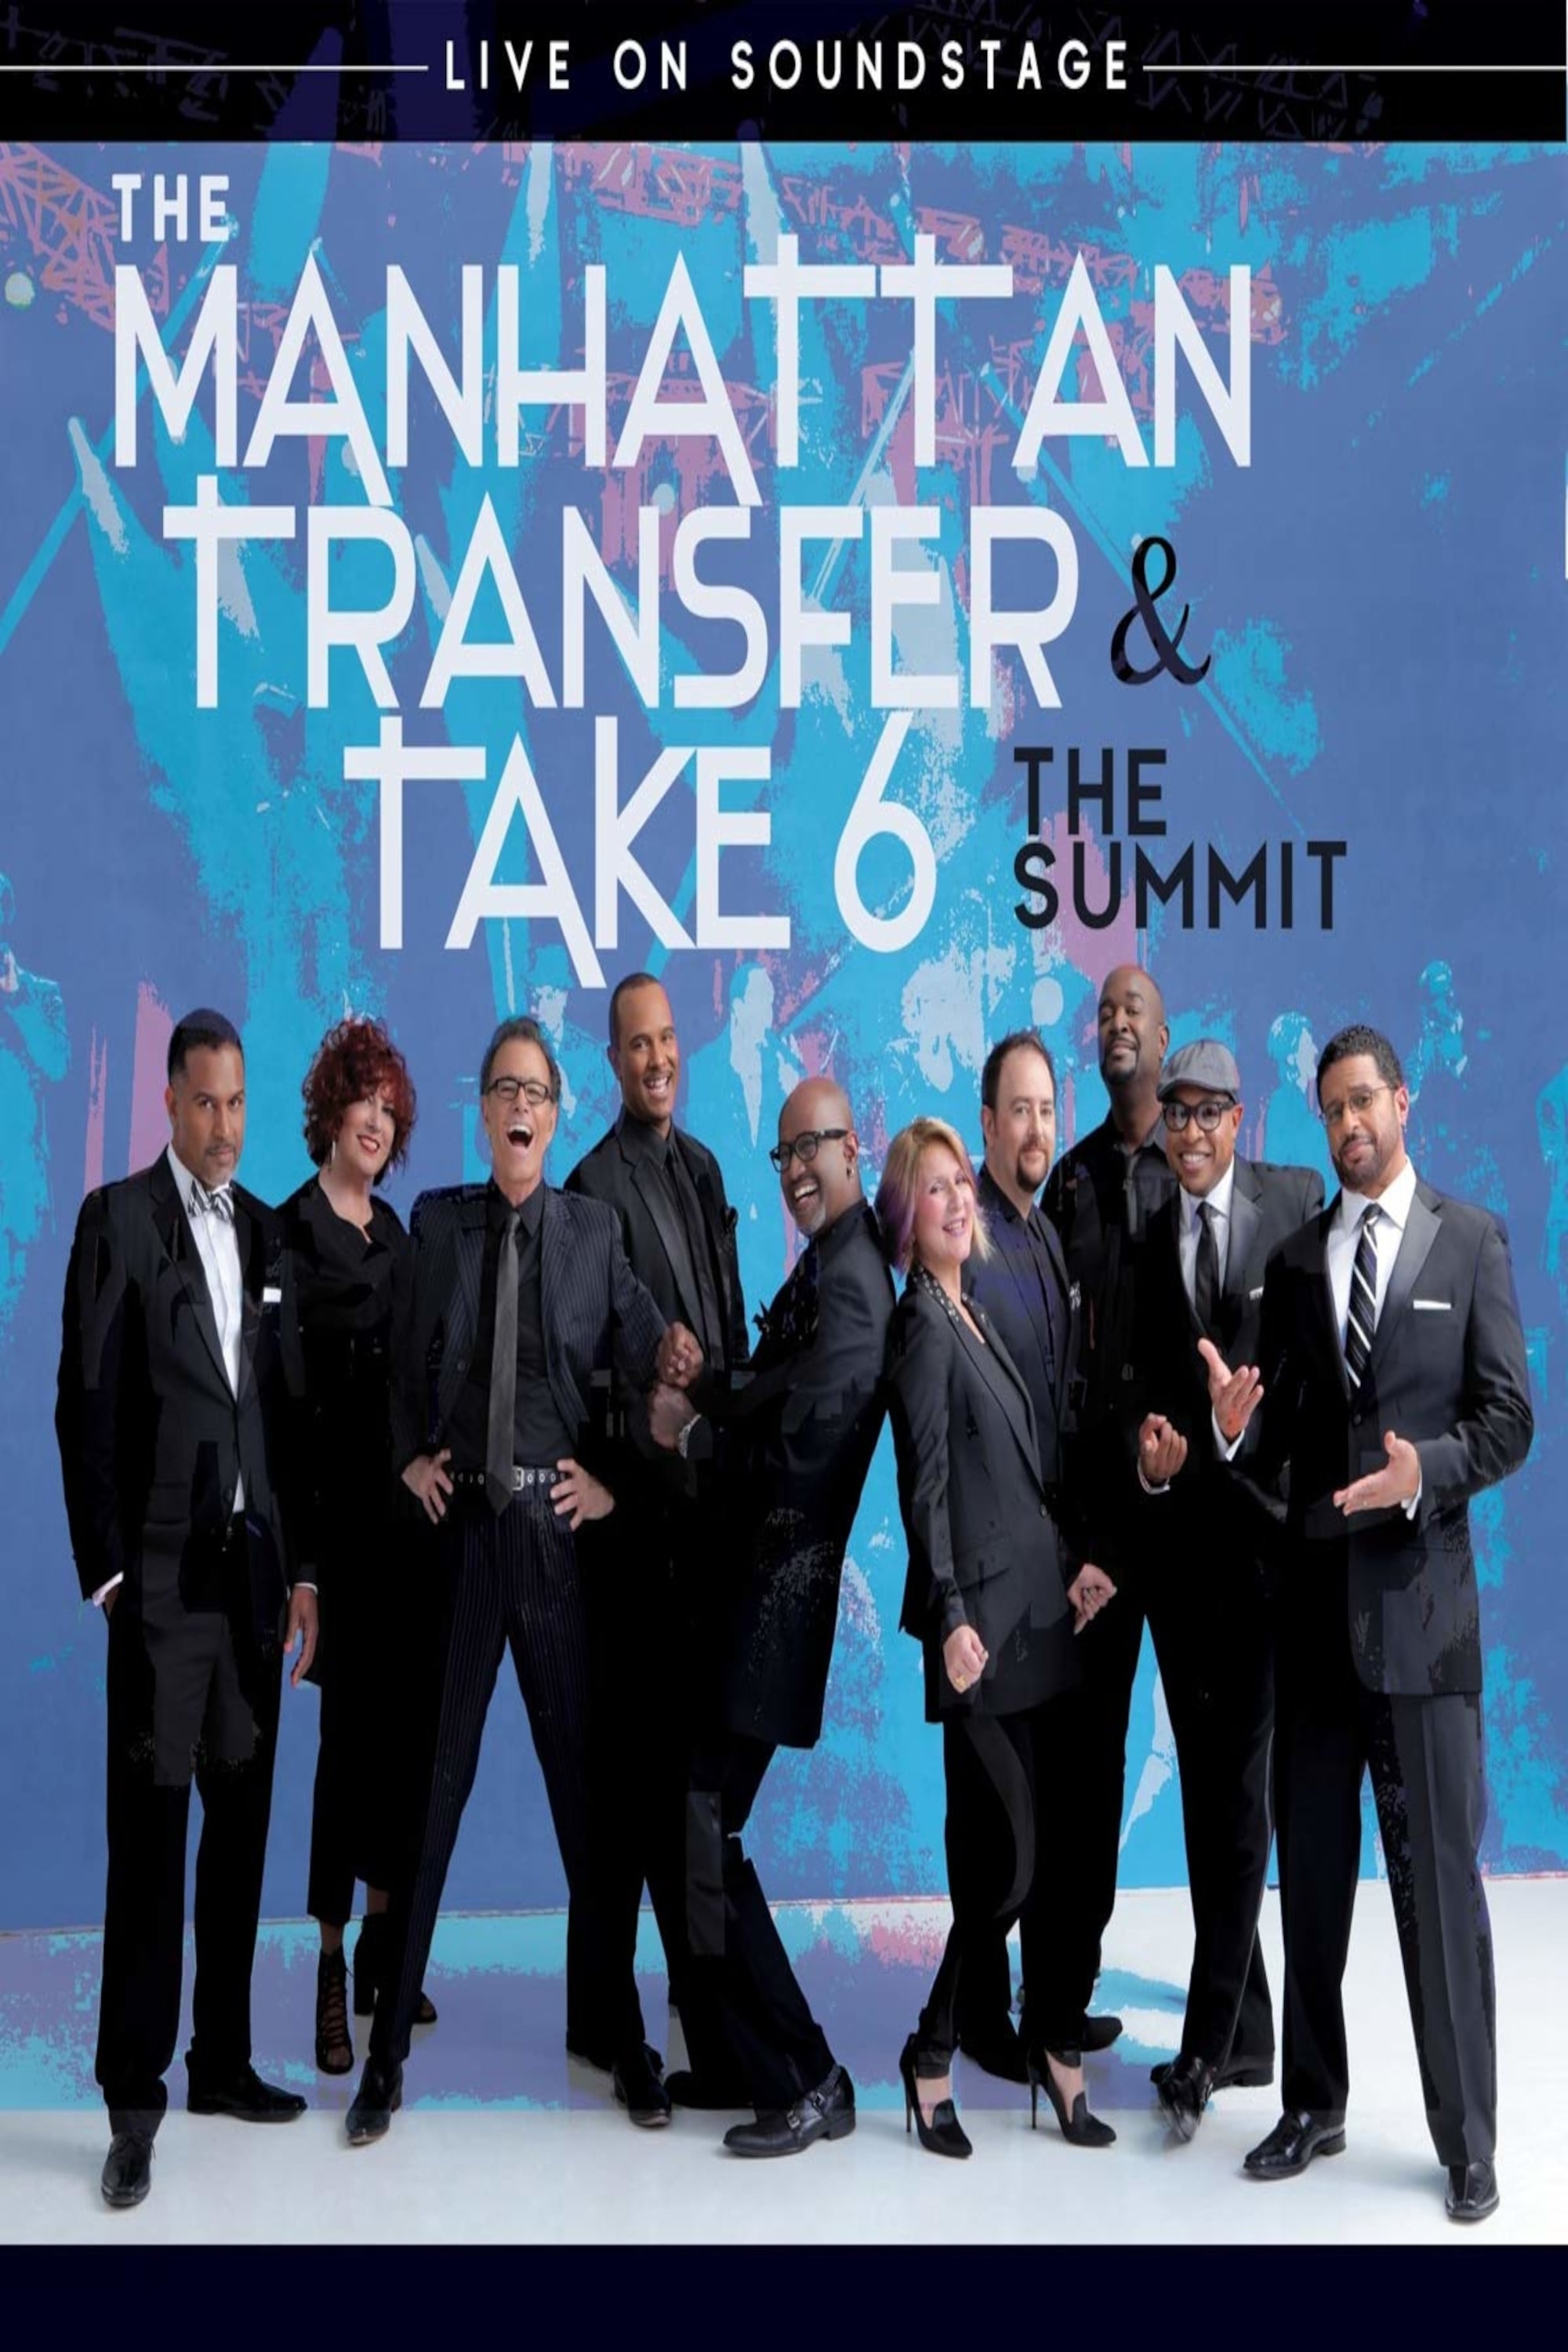 The Manhattan Transfer & Take 6 - The Summit